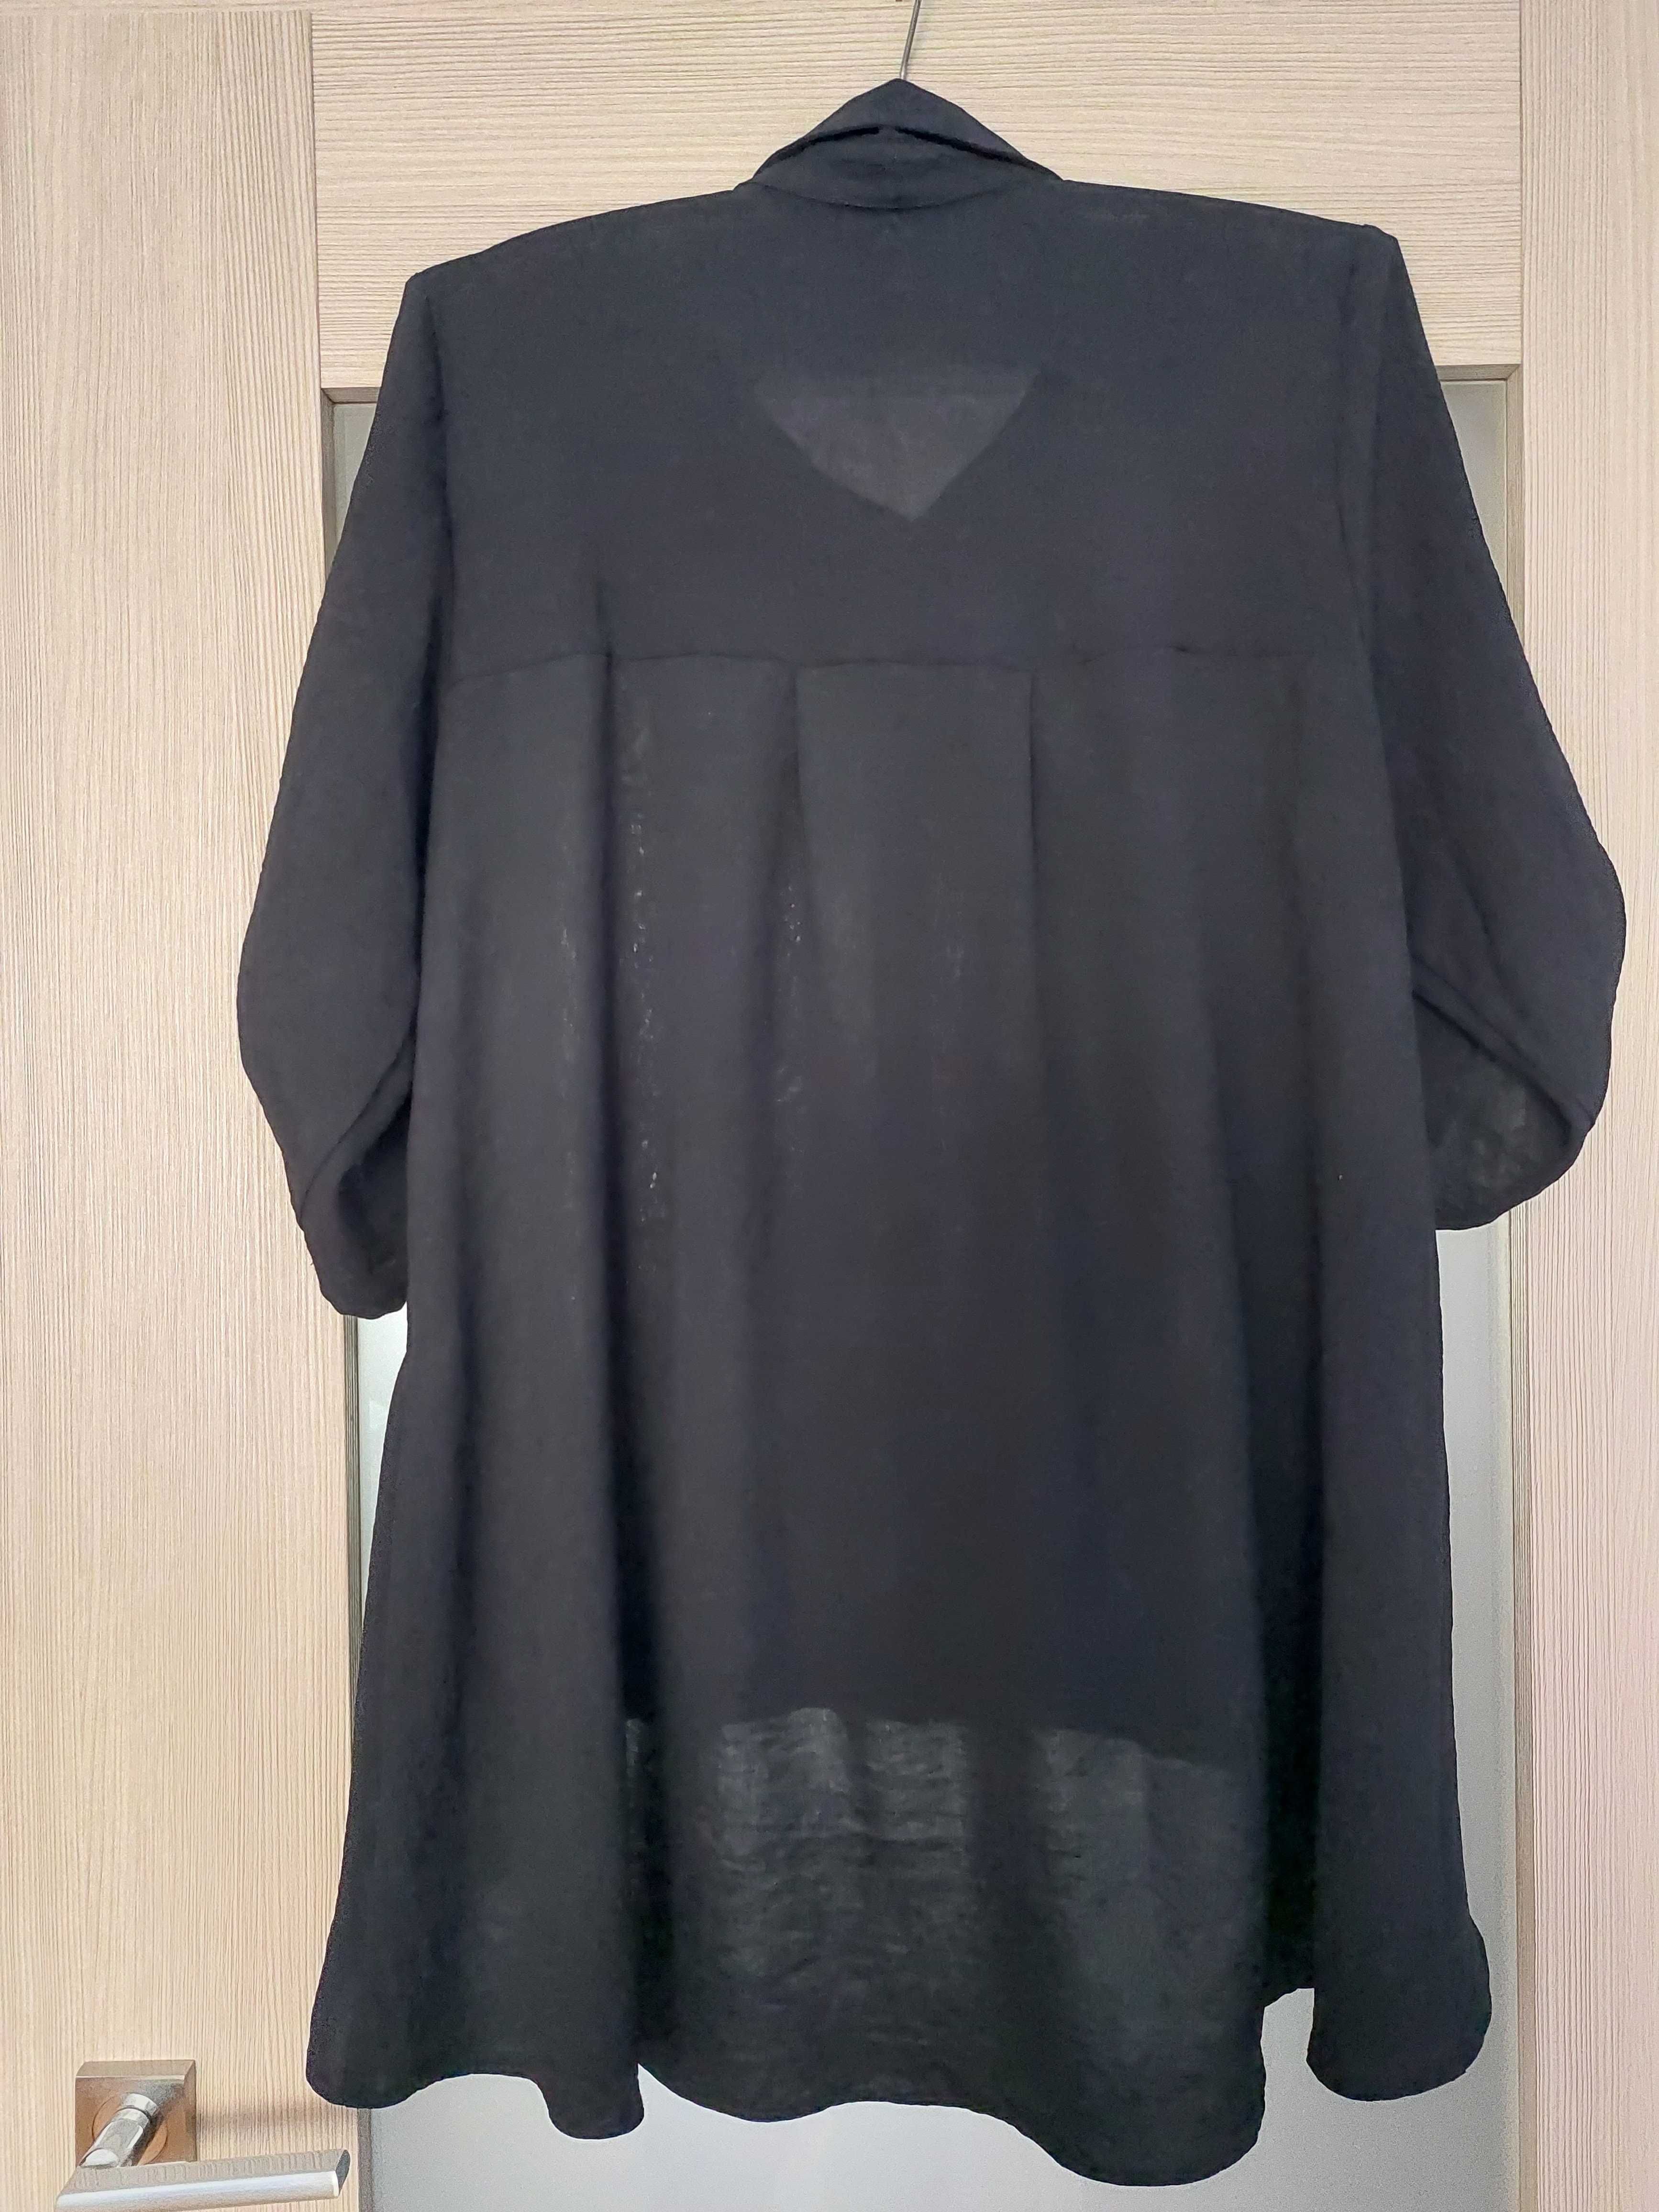 Bluzka,koszula czarna by Kate r 42